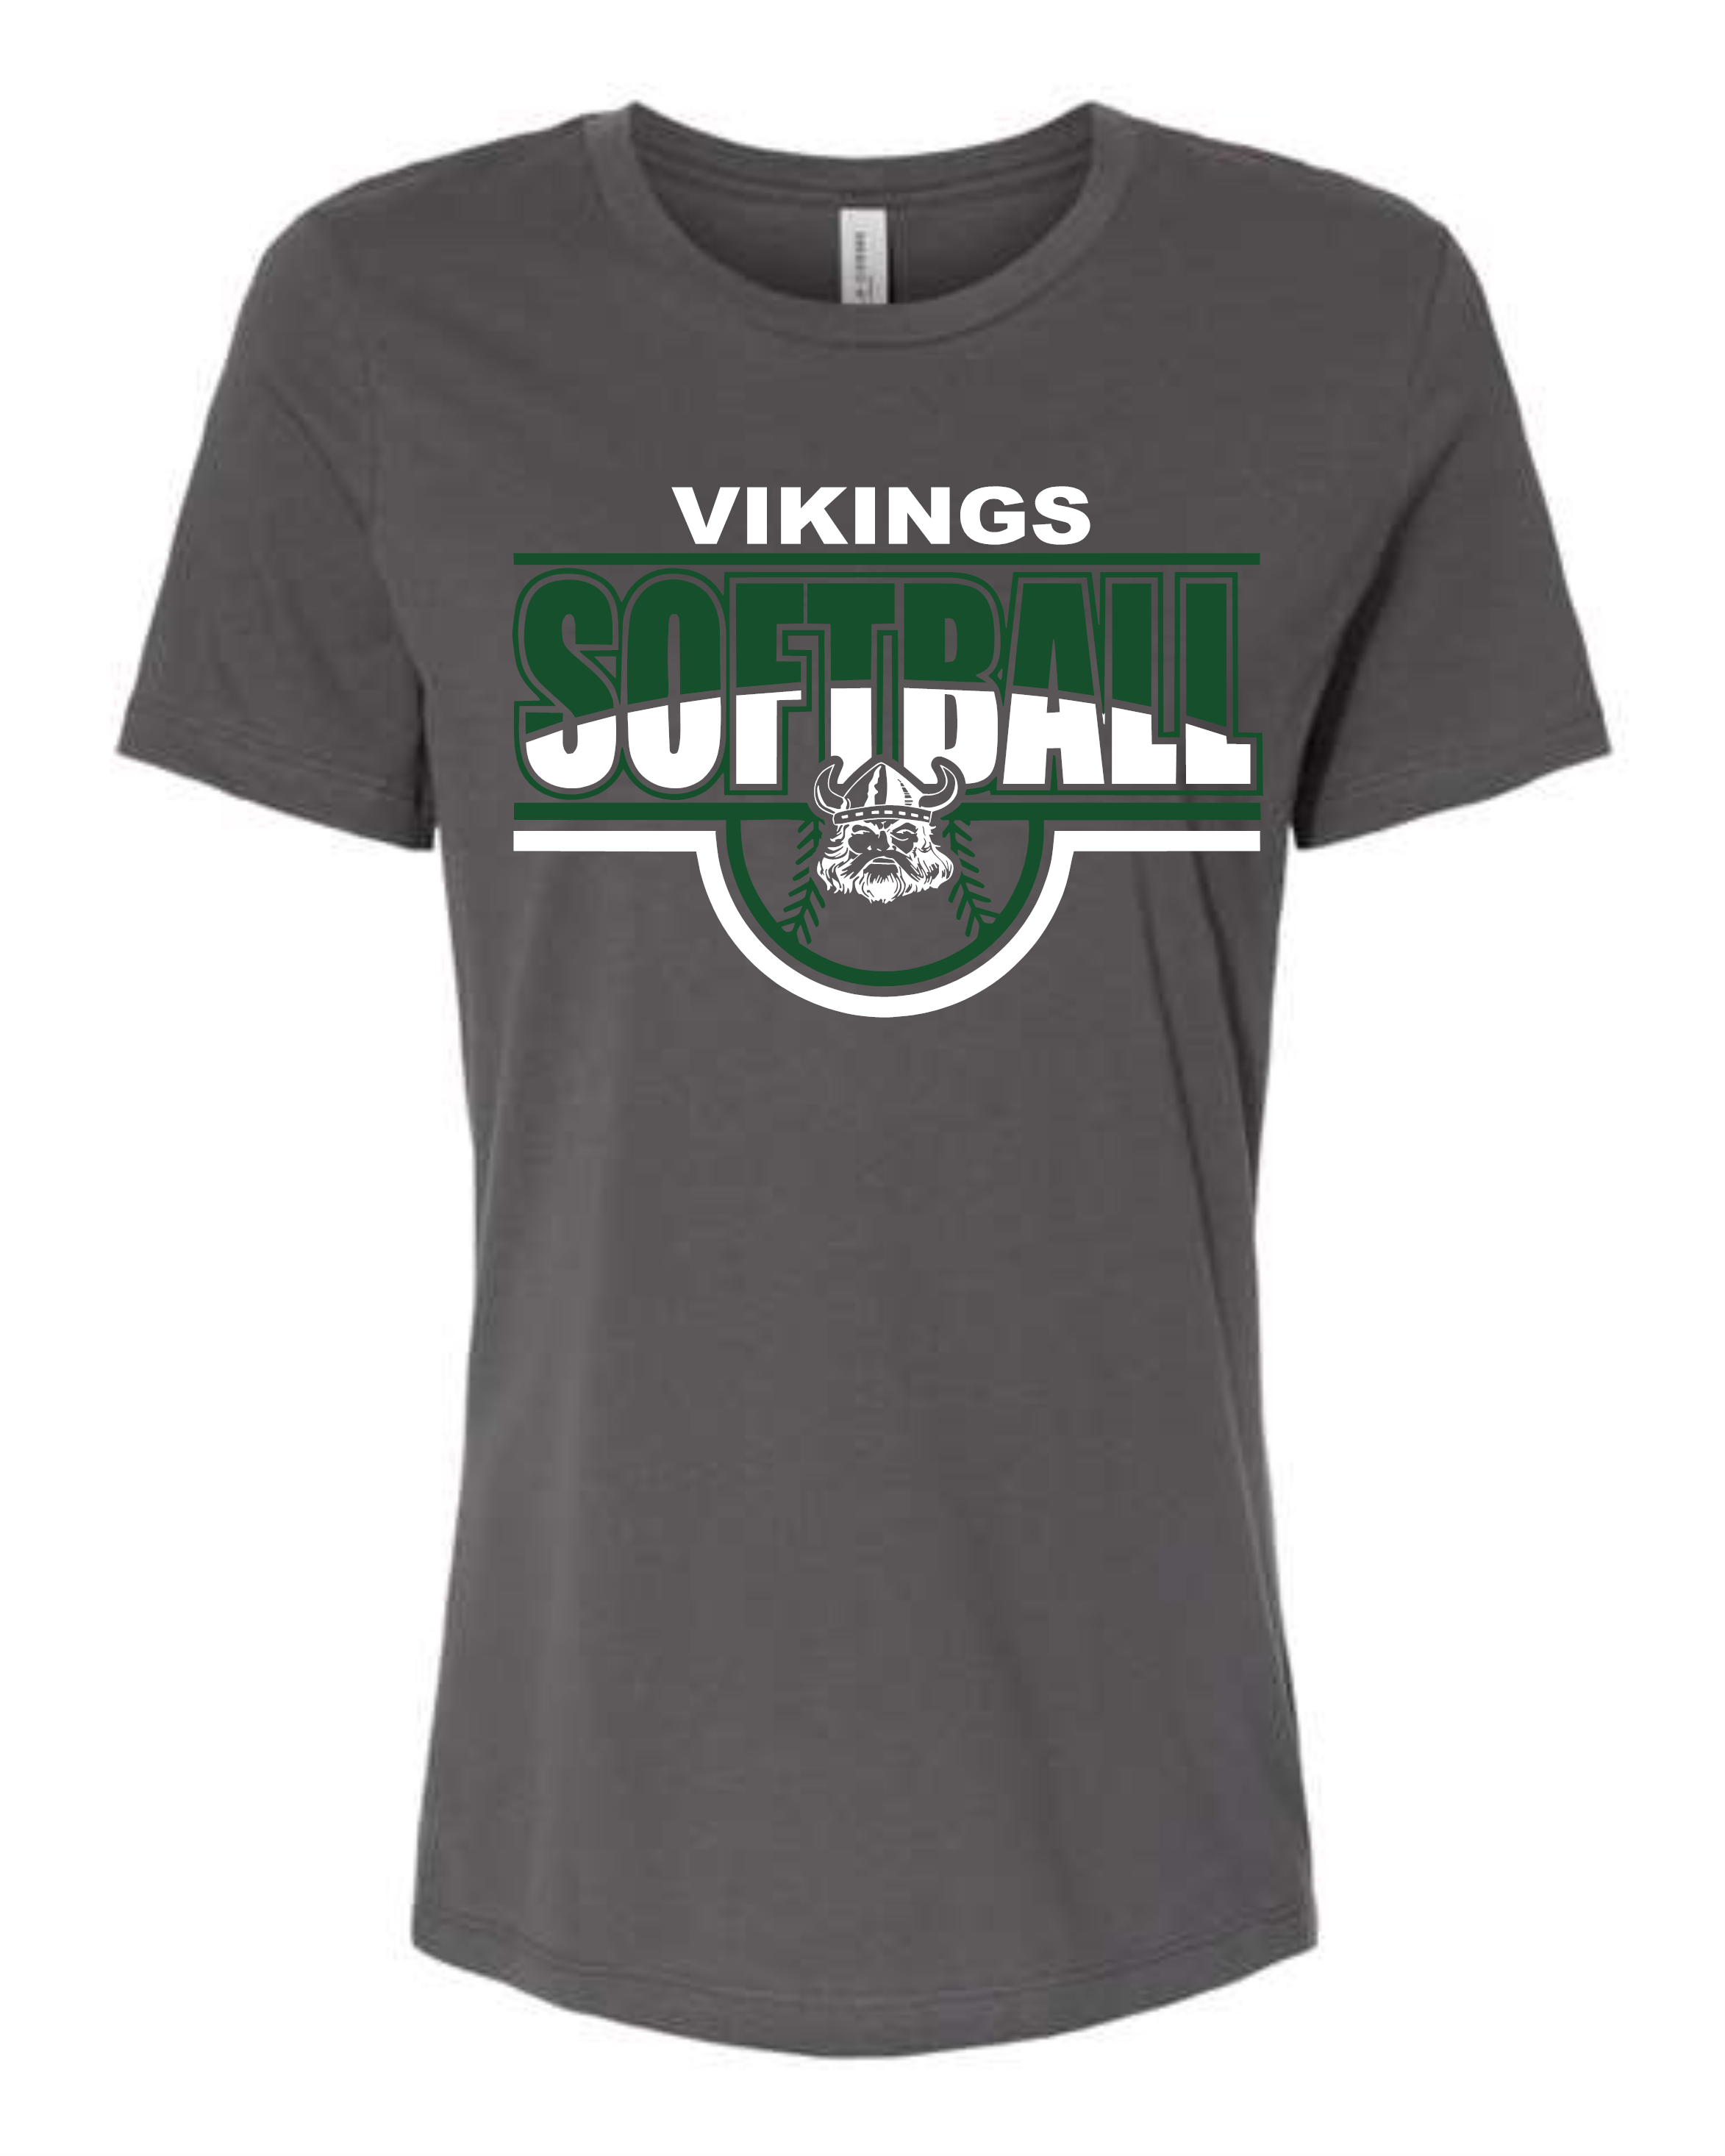 Vikings Softball - Ladies